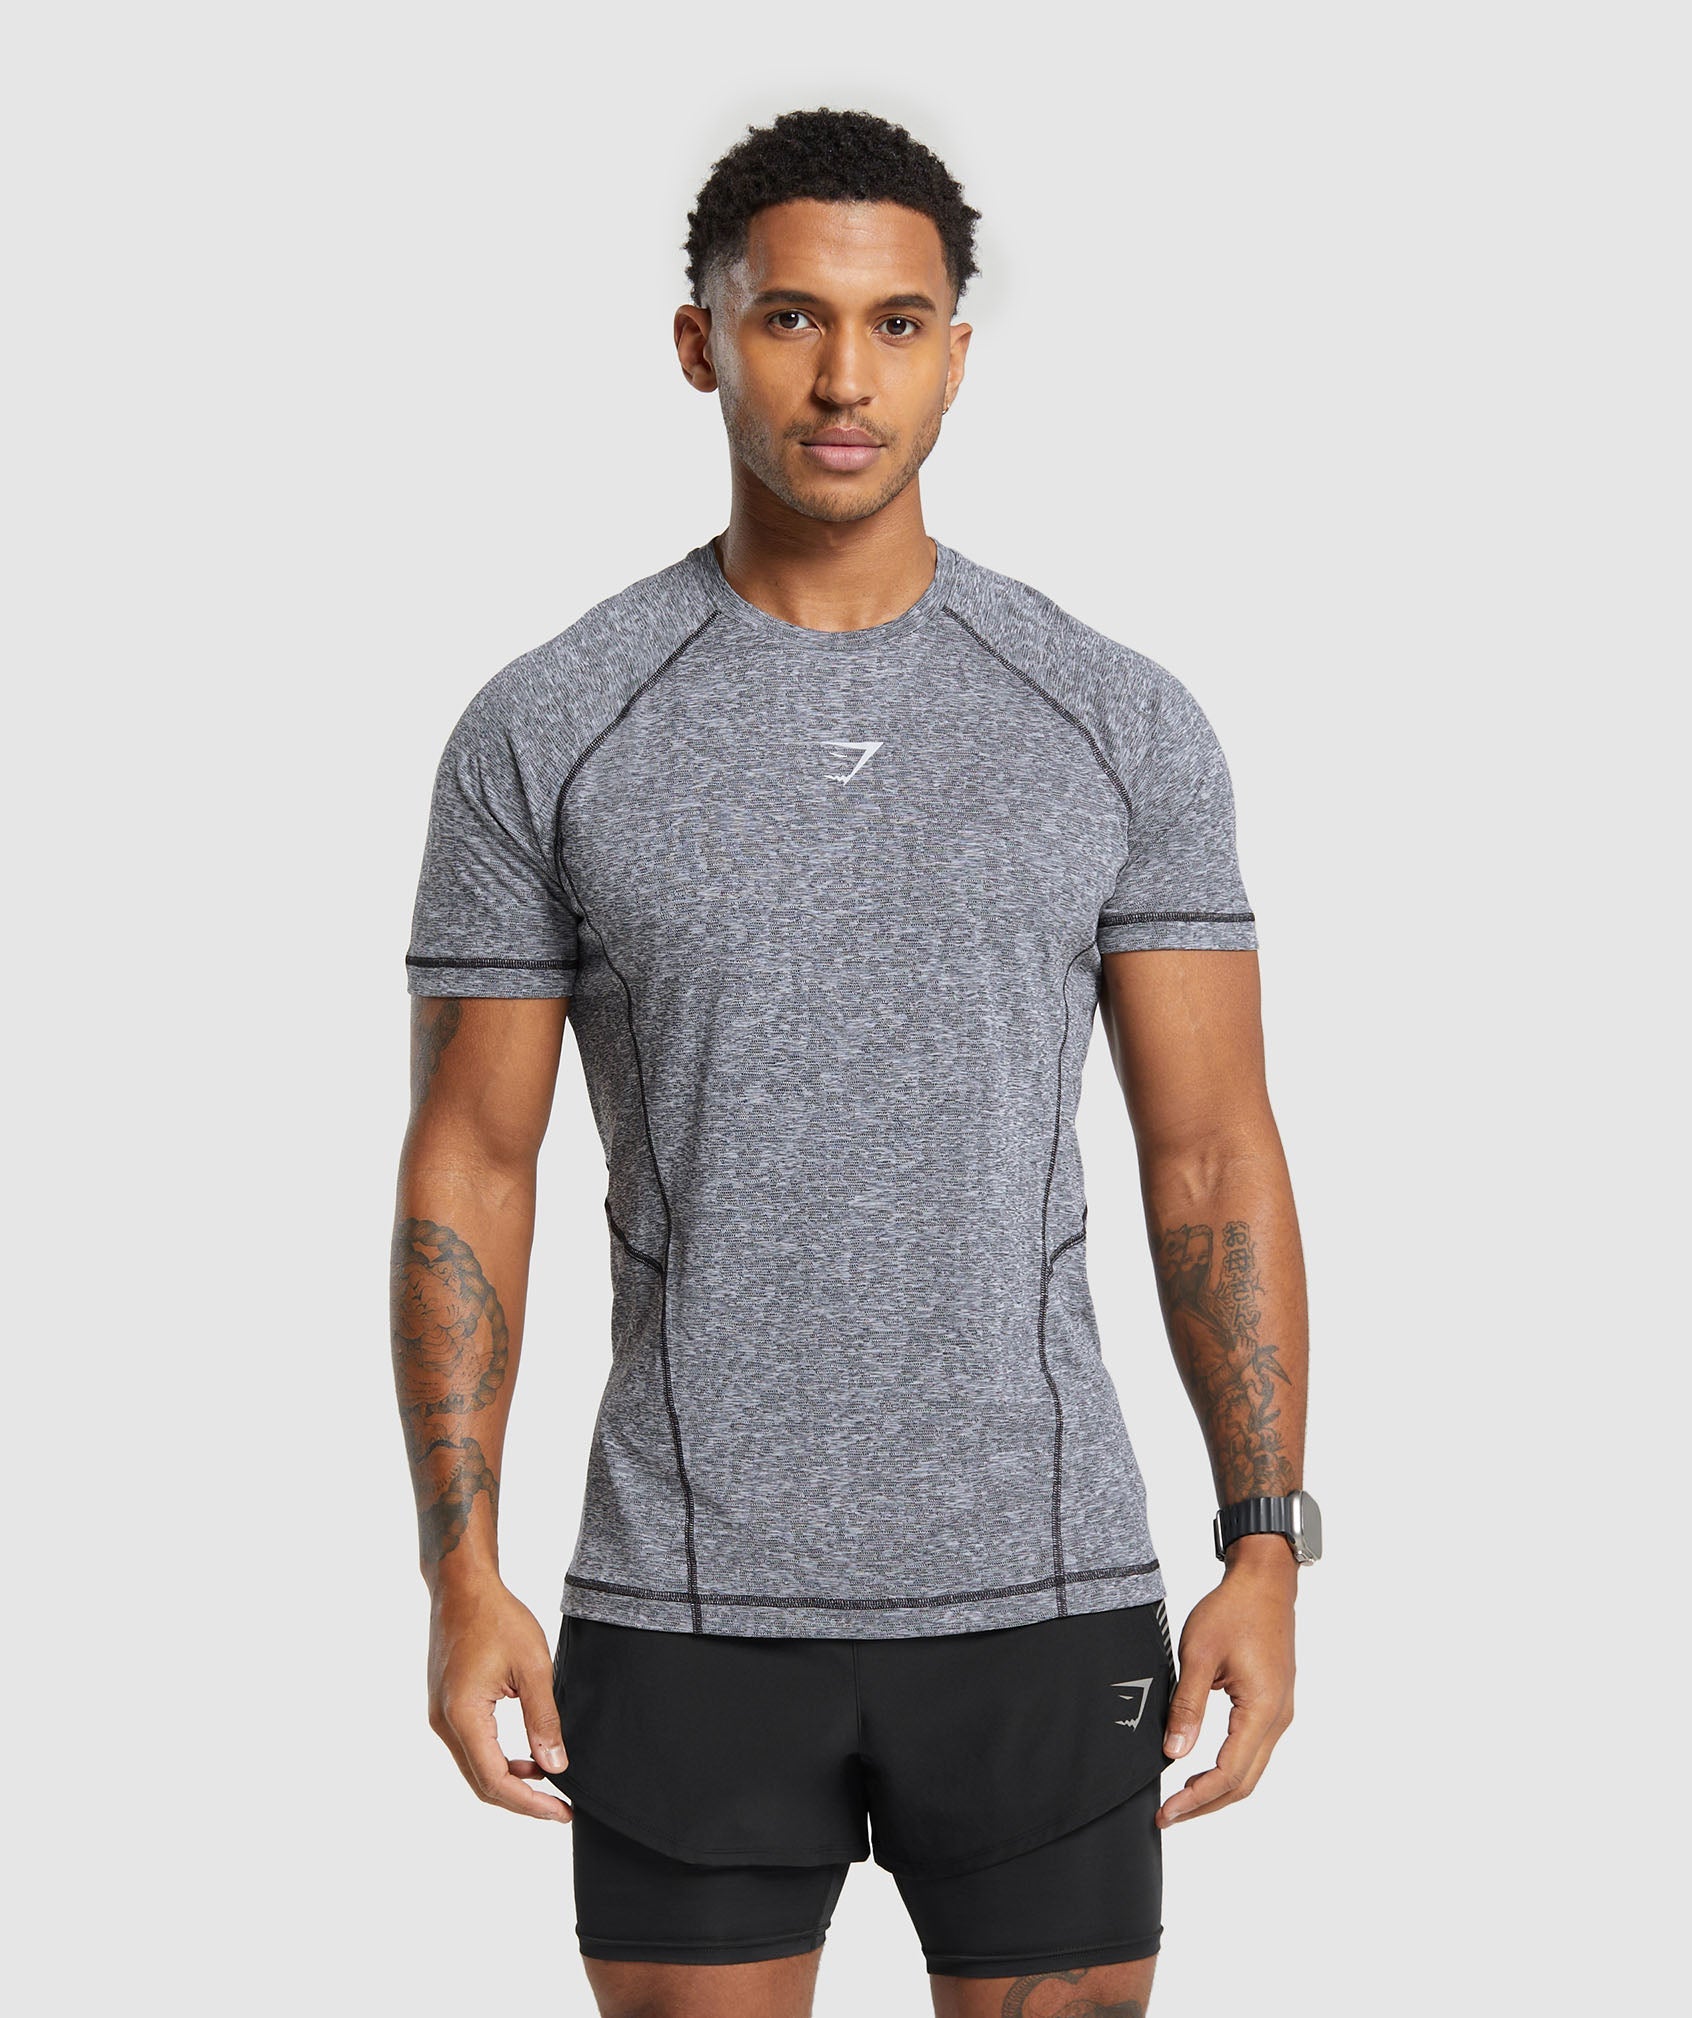 Apex T-Shirt in Black/Light Grey